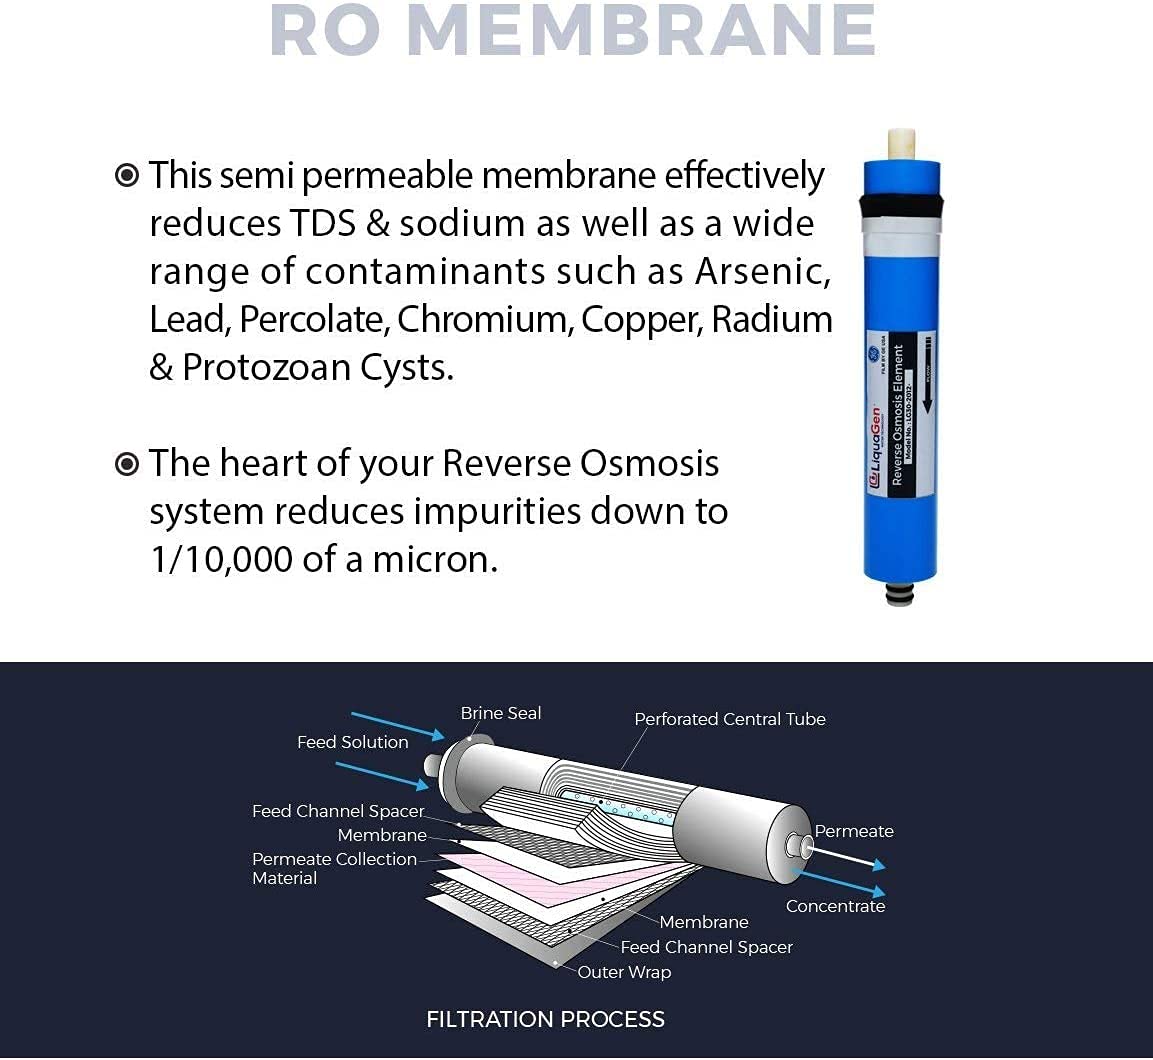 LiquaGen - 300 GPD Water Saver Upgrade Kit - Aquarium Reef/Reverse Osmosis Membrane + Full Membrane Housing Kit | RO Water Purification Replacement Filter Kit for Under Sink or Countertop Use